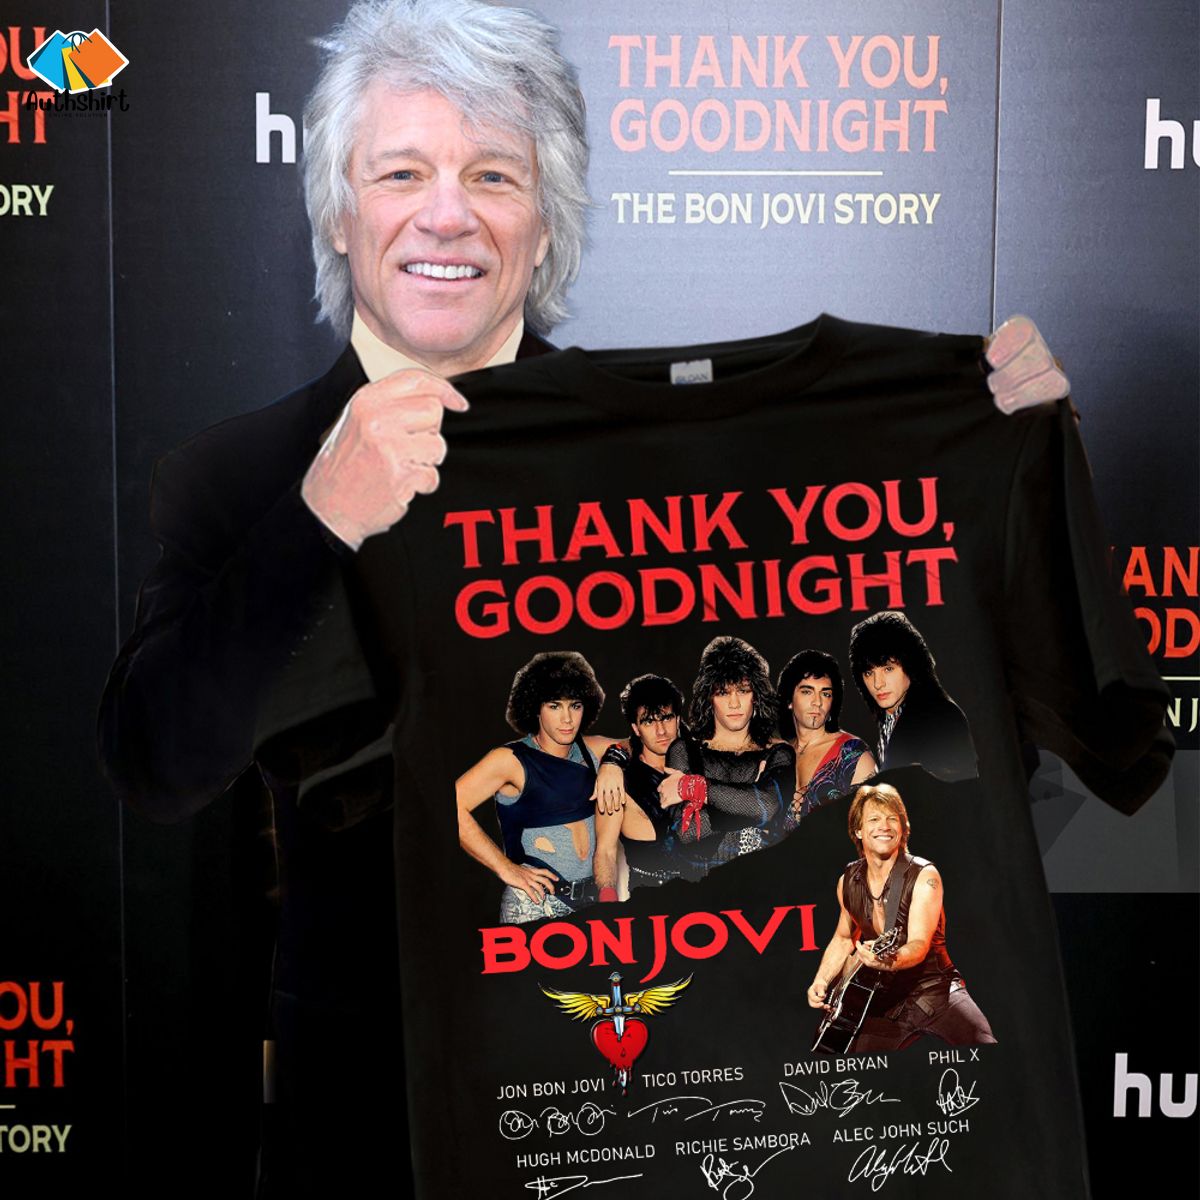 Bon Jovi Thank You Goodnight Signature Shirt